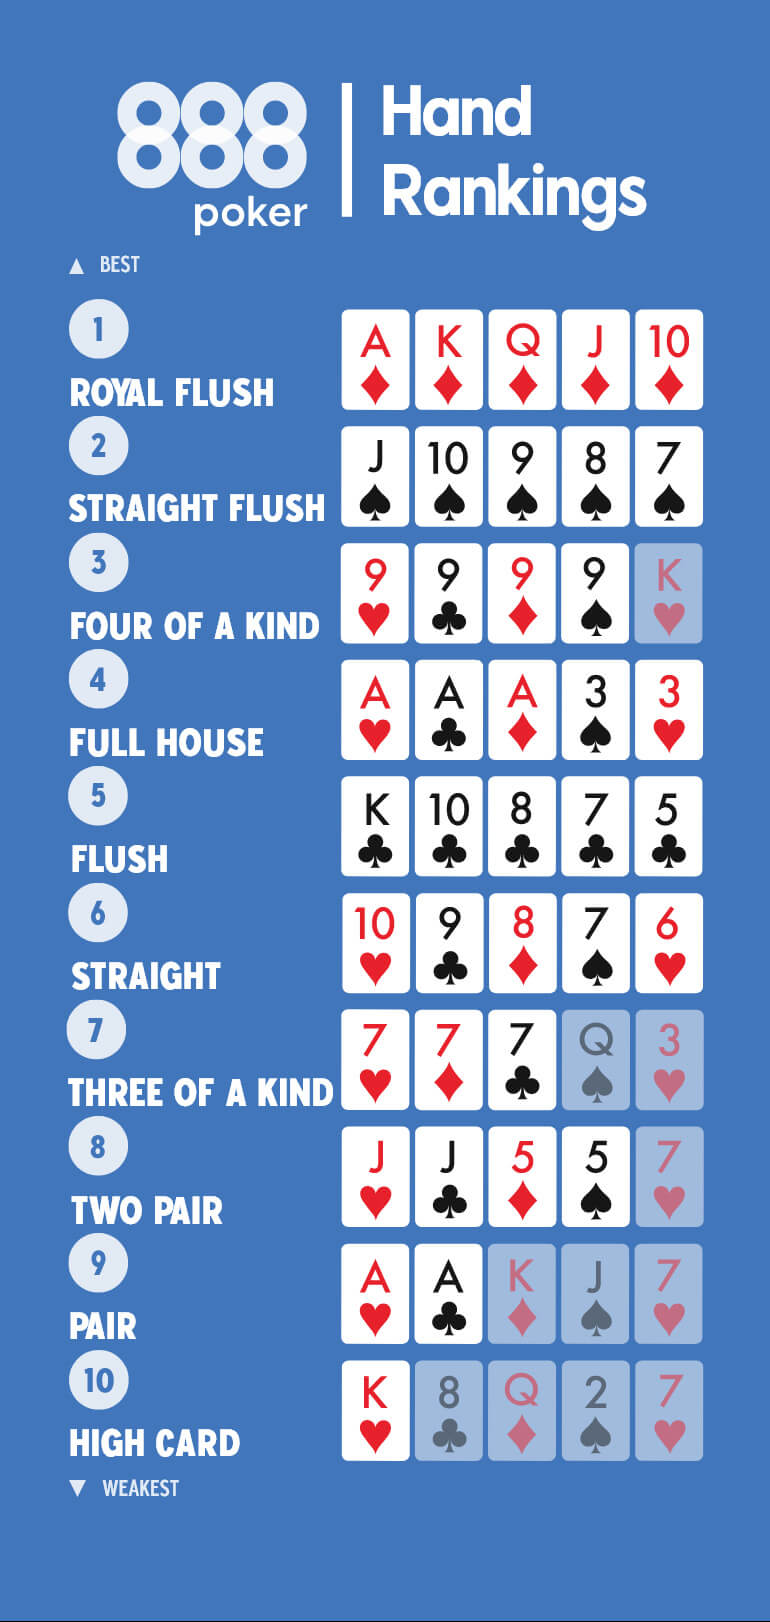 Regler for kortspillet poker - Sådan spiller du kortspillet poker